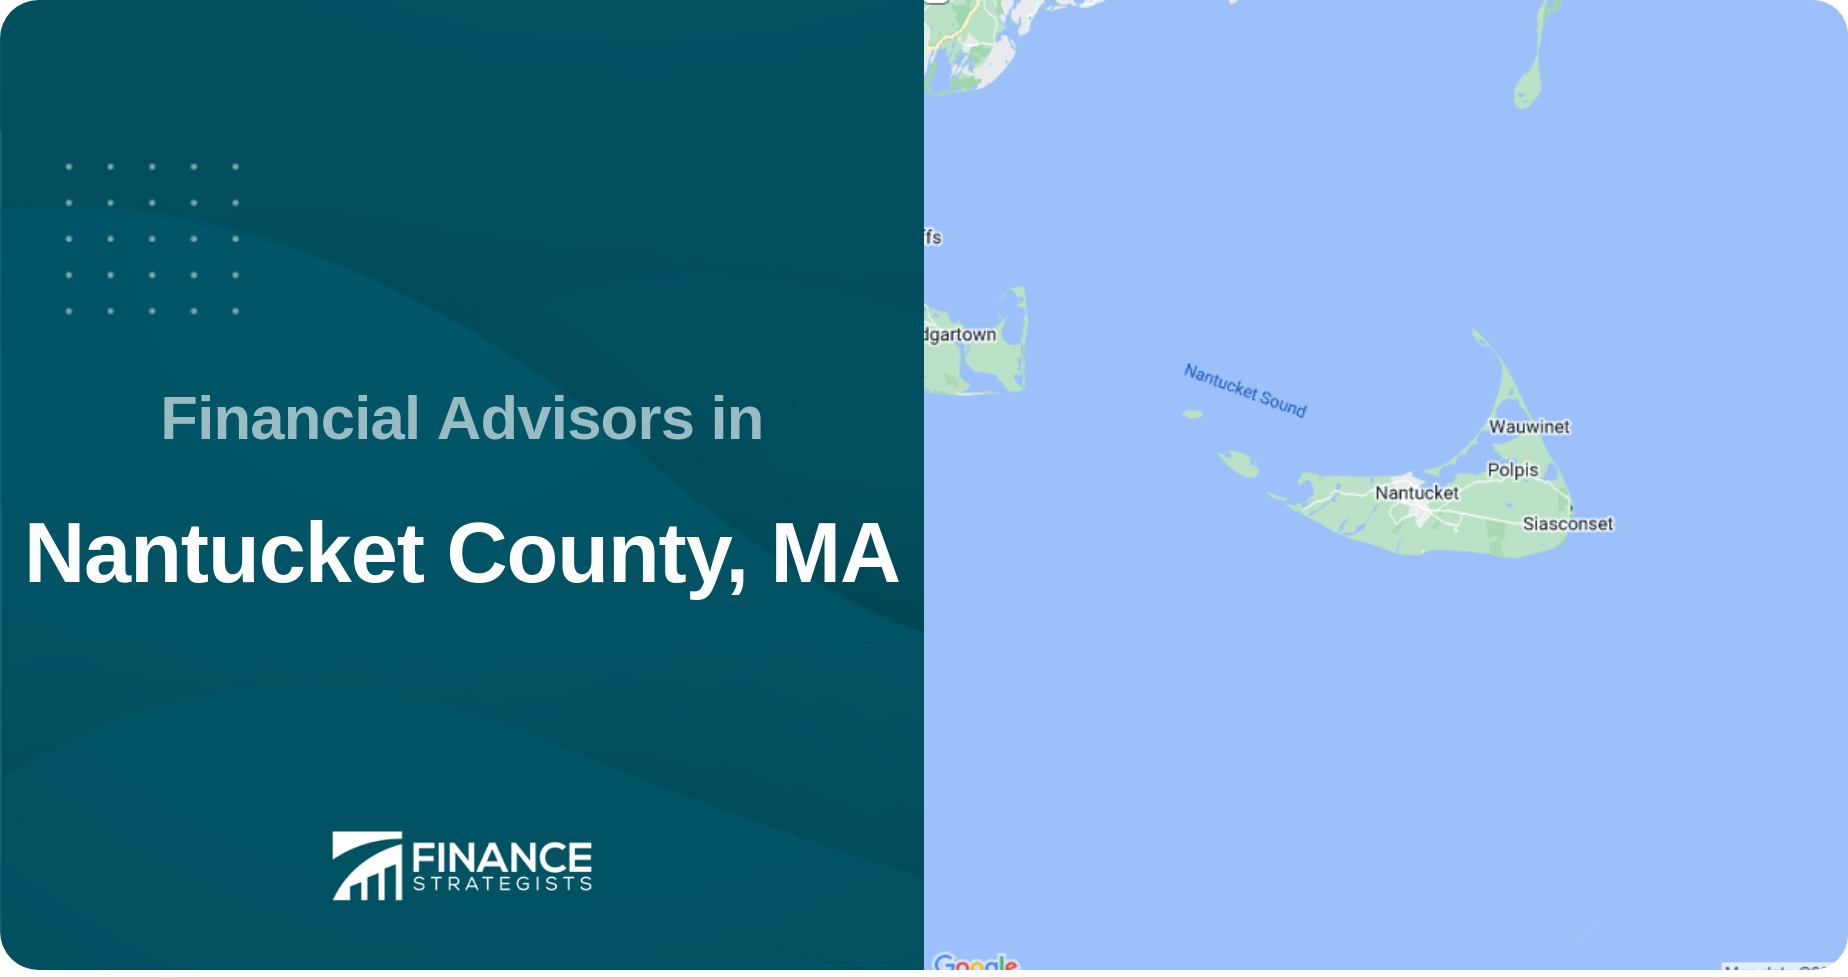 Financial Advisors in Nantucket County, MA